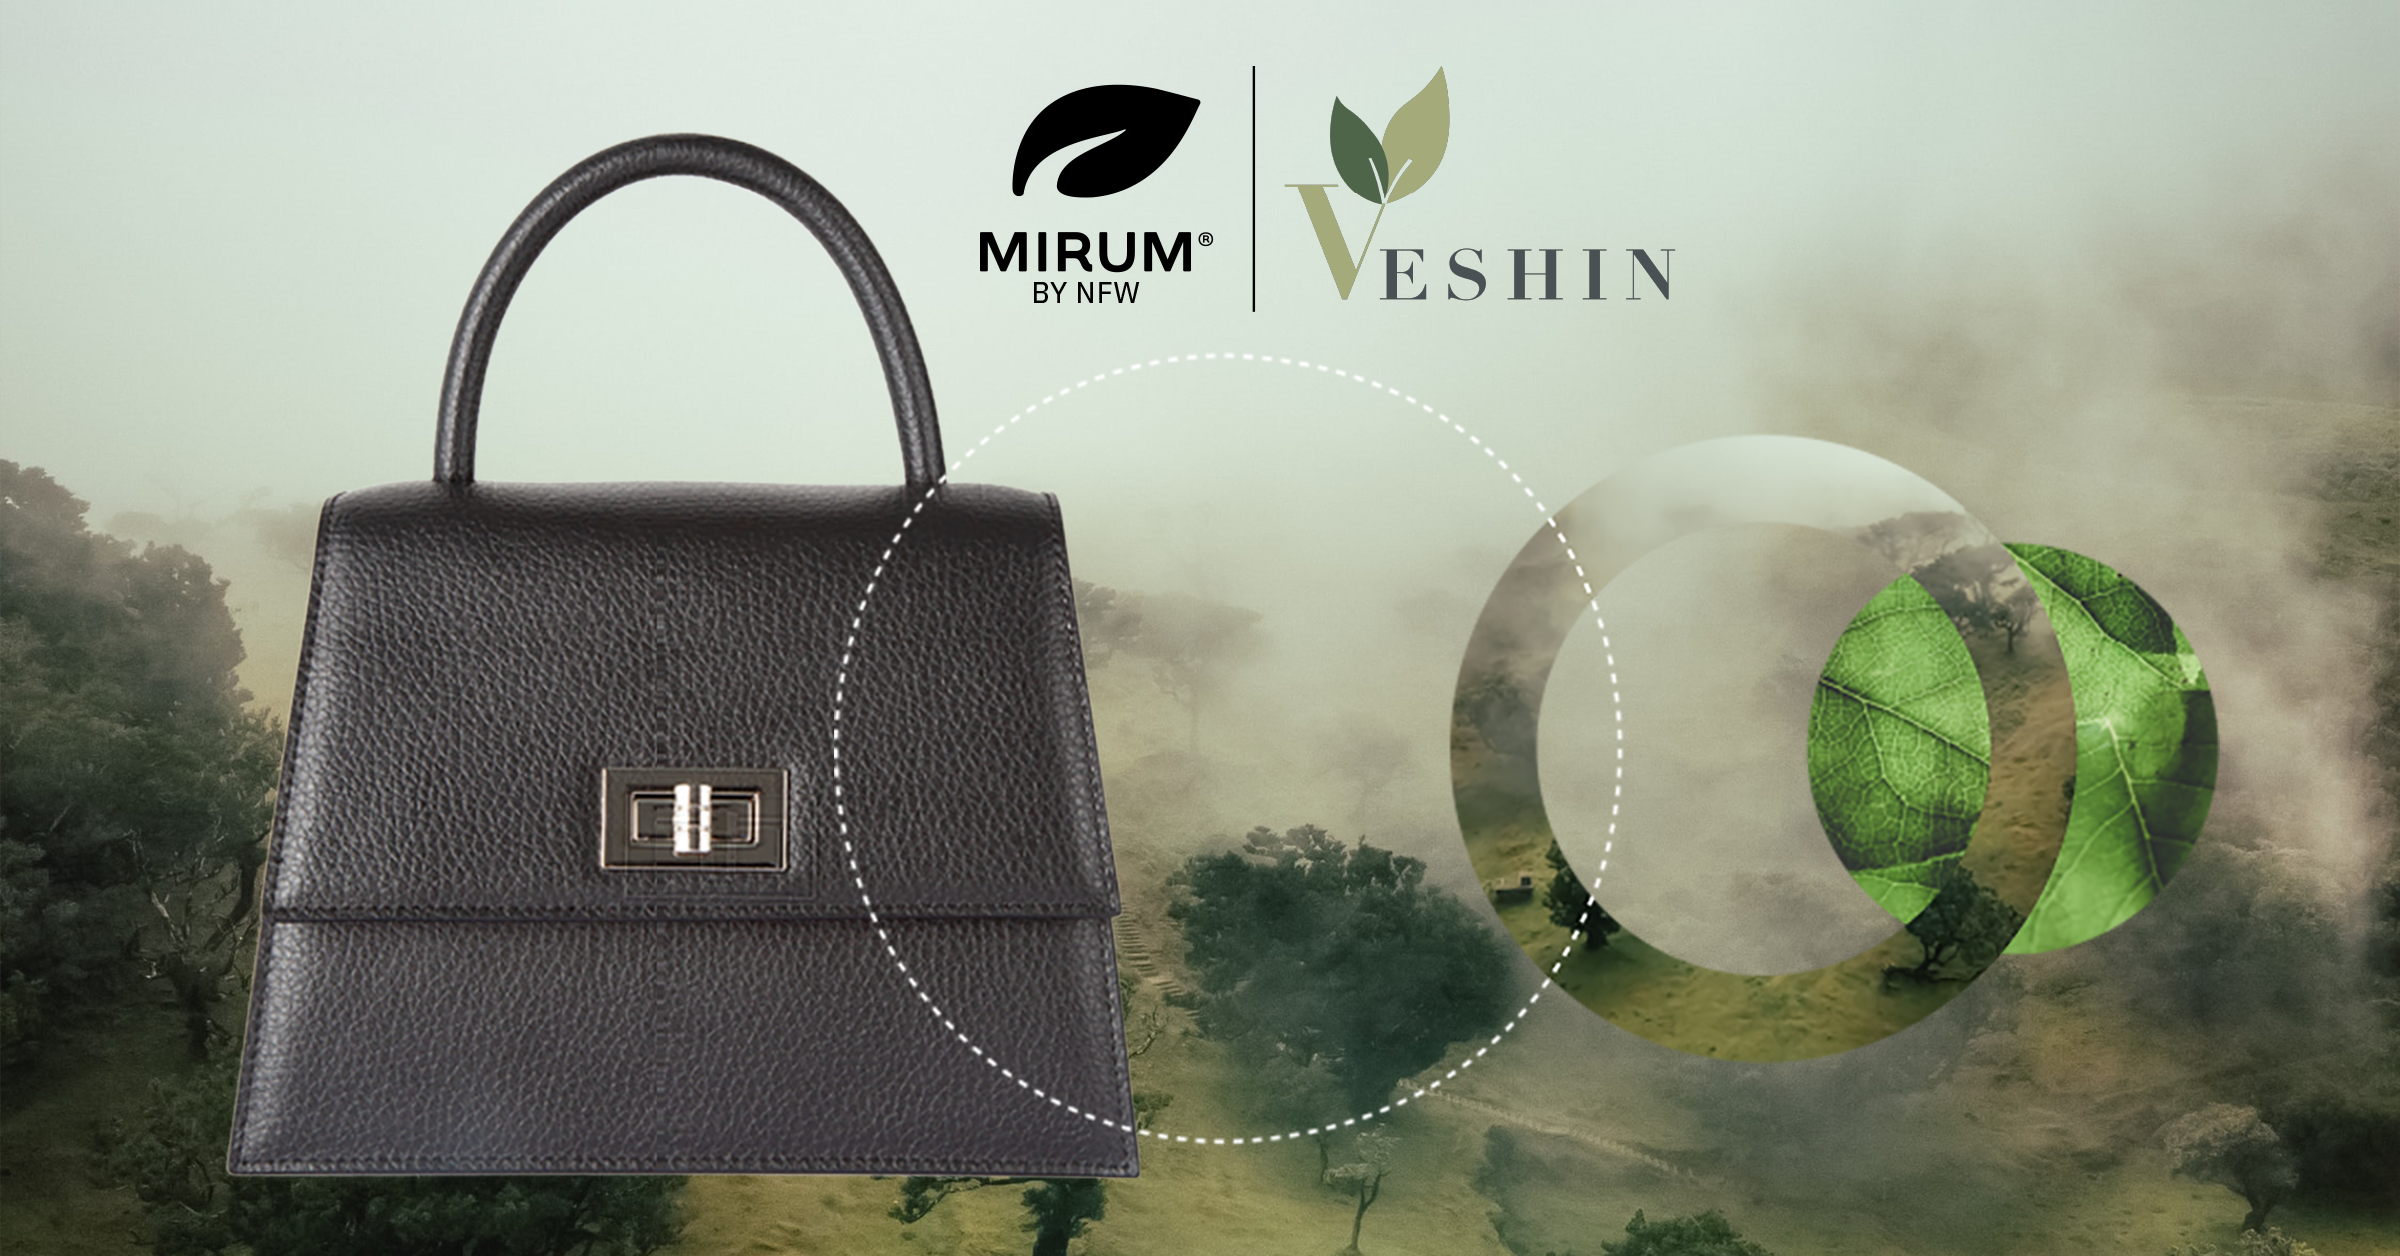 MIRUM bag and Veshin Factory logo